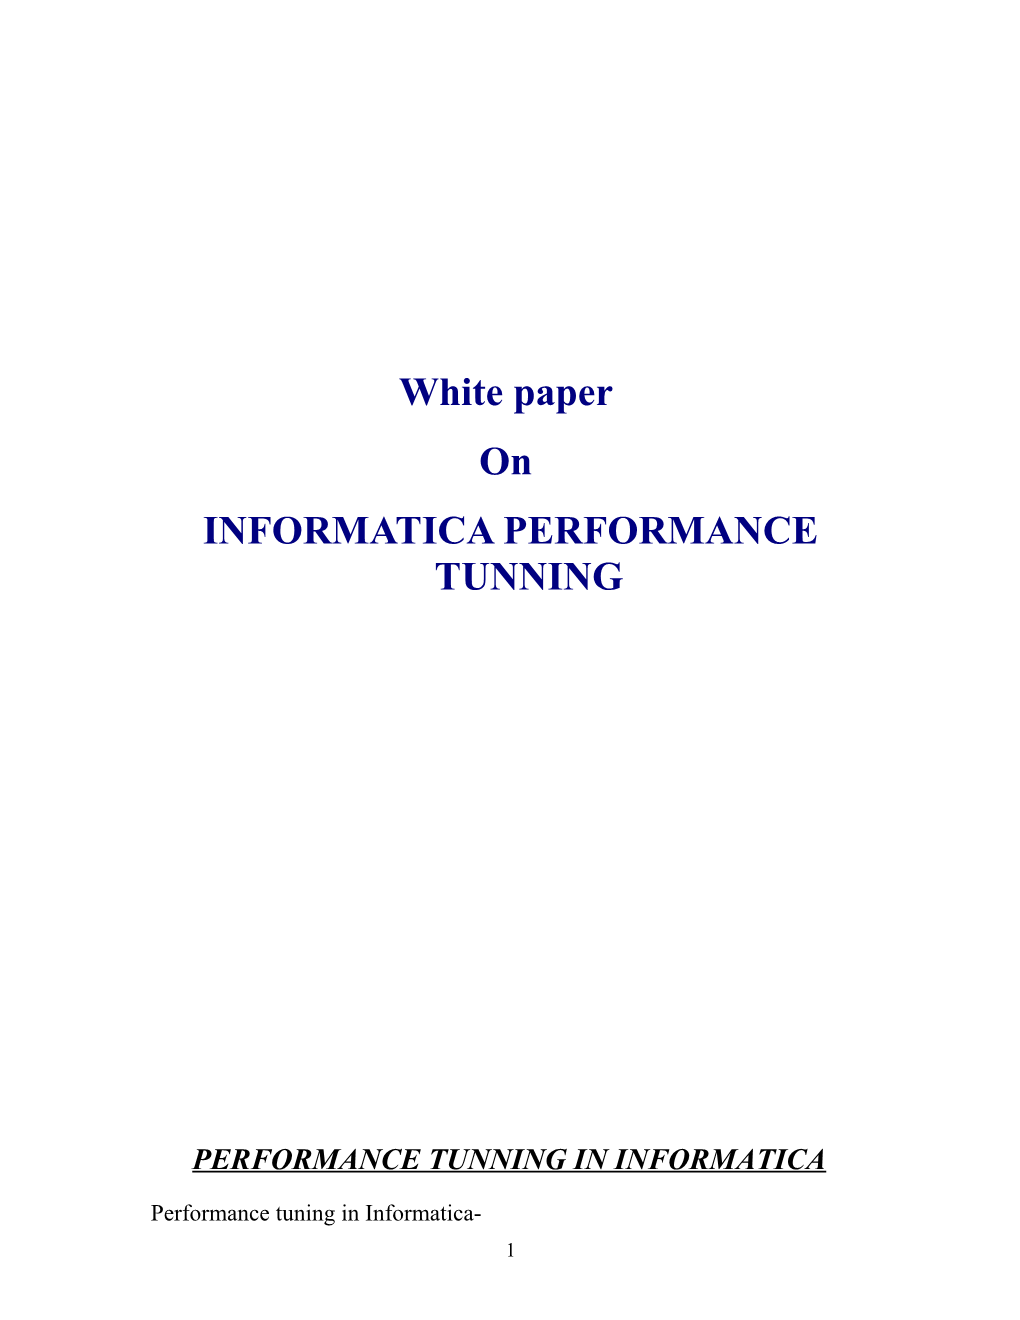 Informatica Performance Tunning